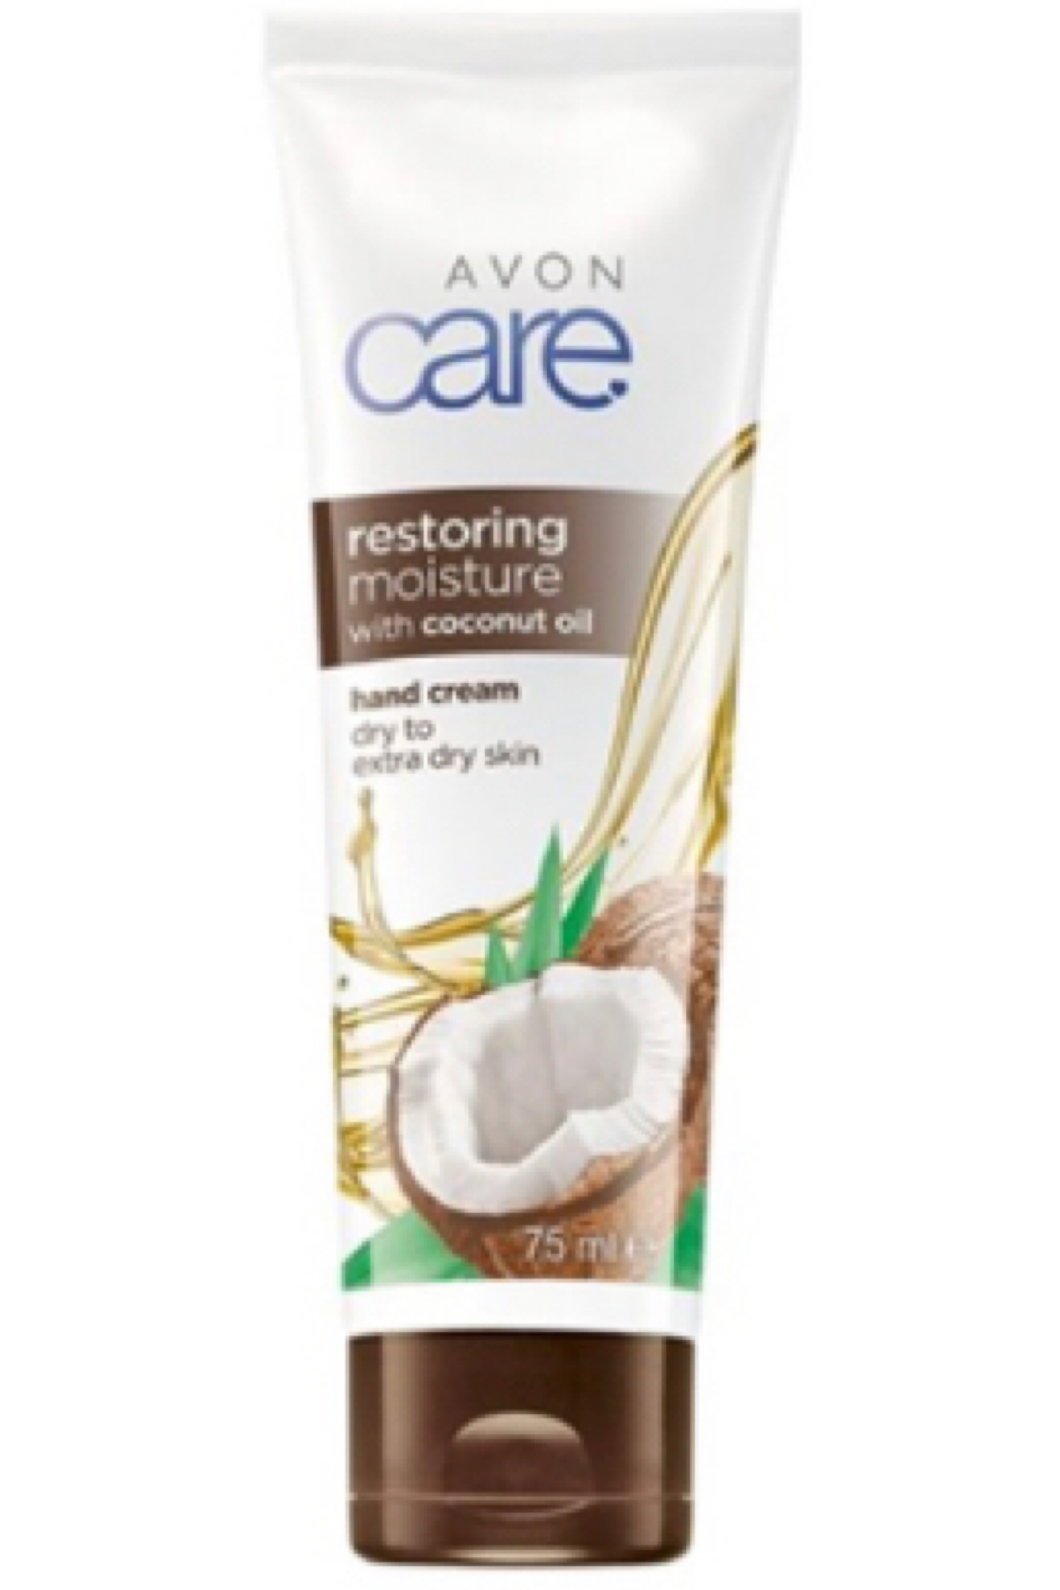 Avon Care Restoring Moisture with Coconut Oil Hand Cream 75ml